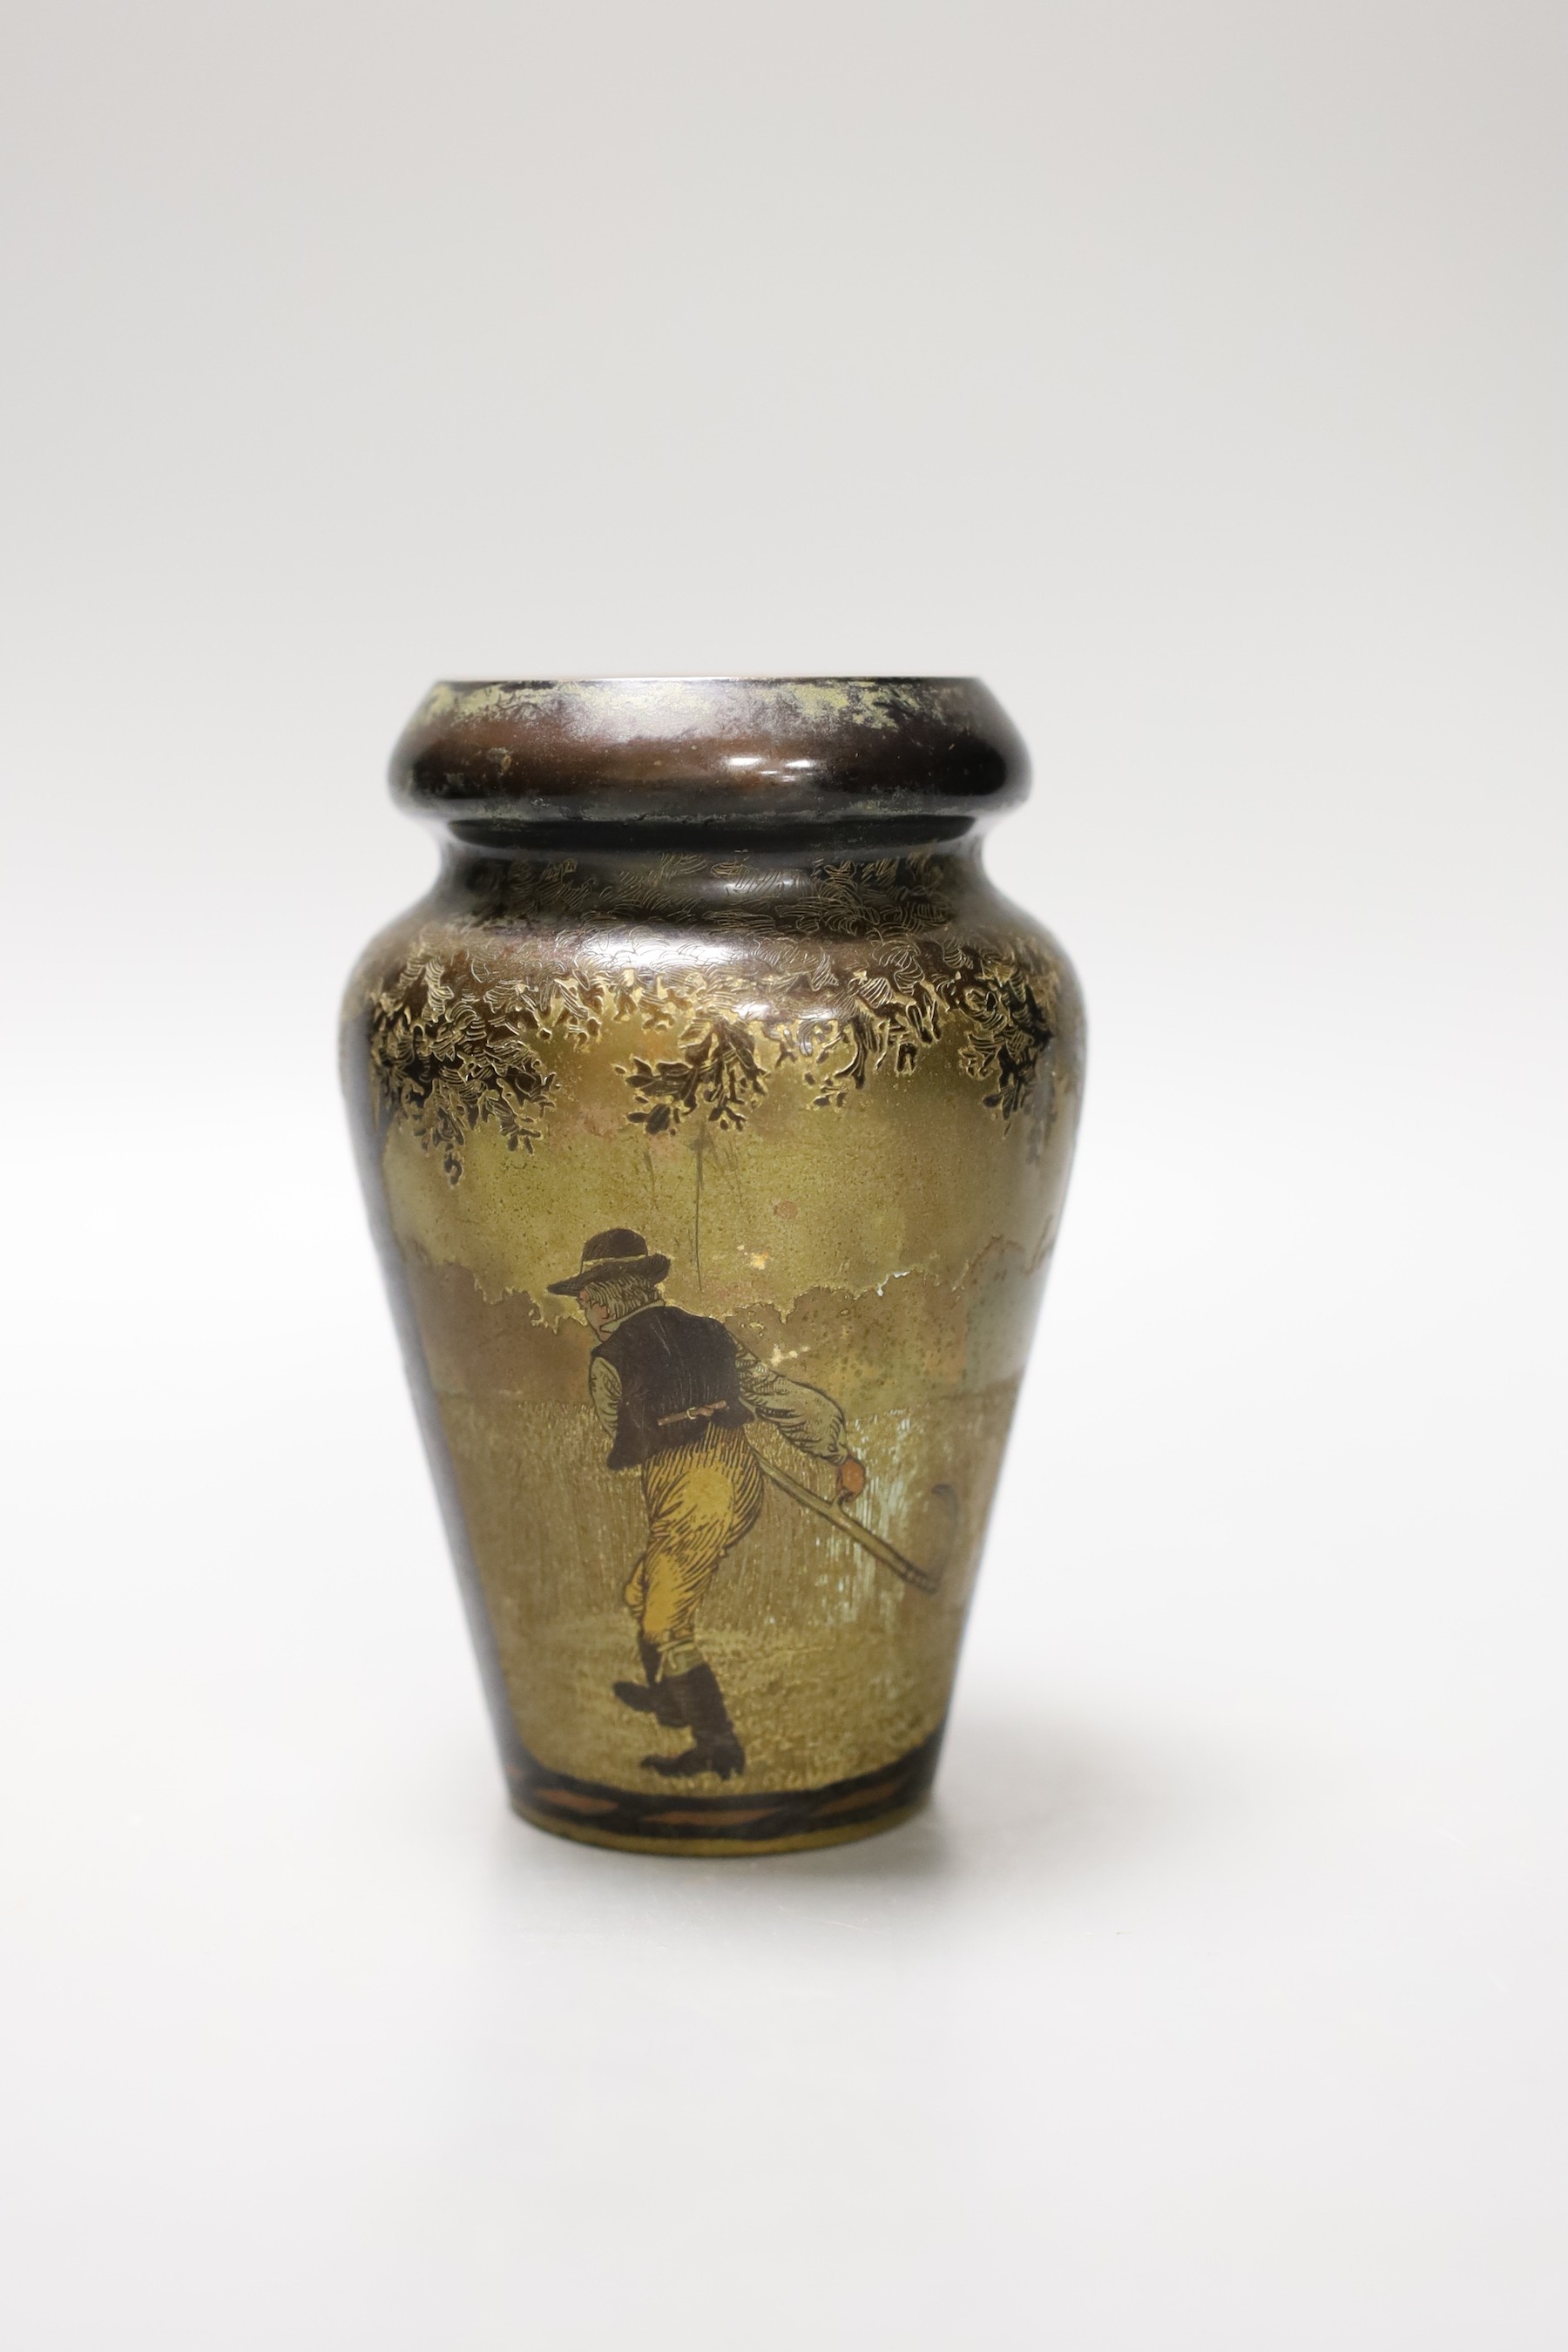 A bronze figuratively enamelled vase, 13.5cm tall